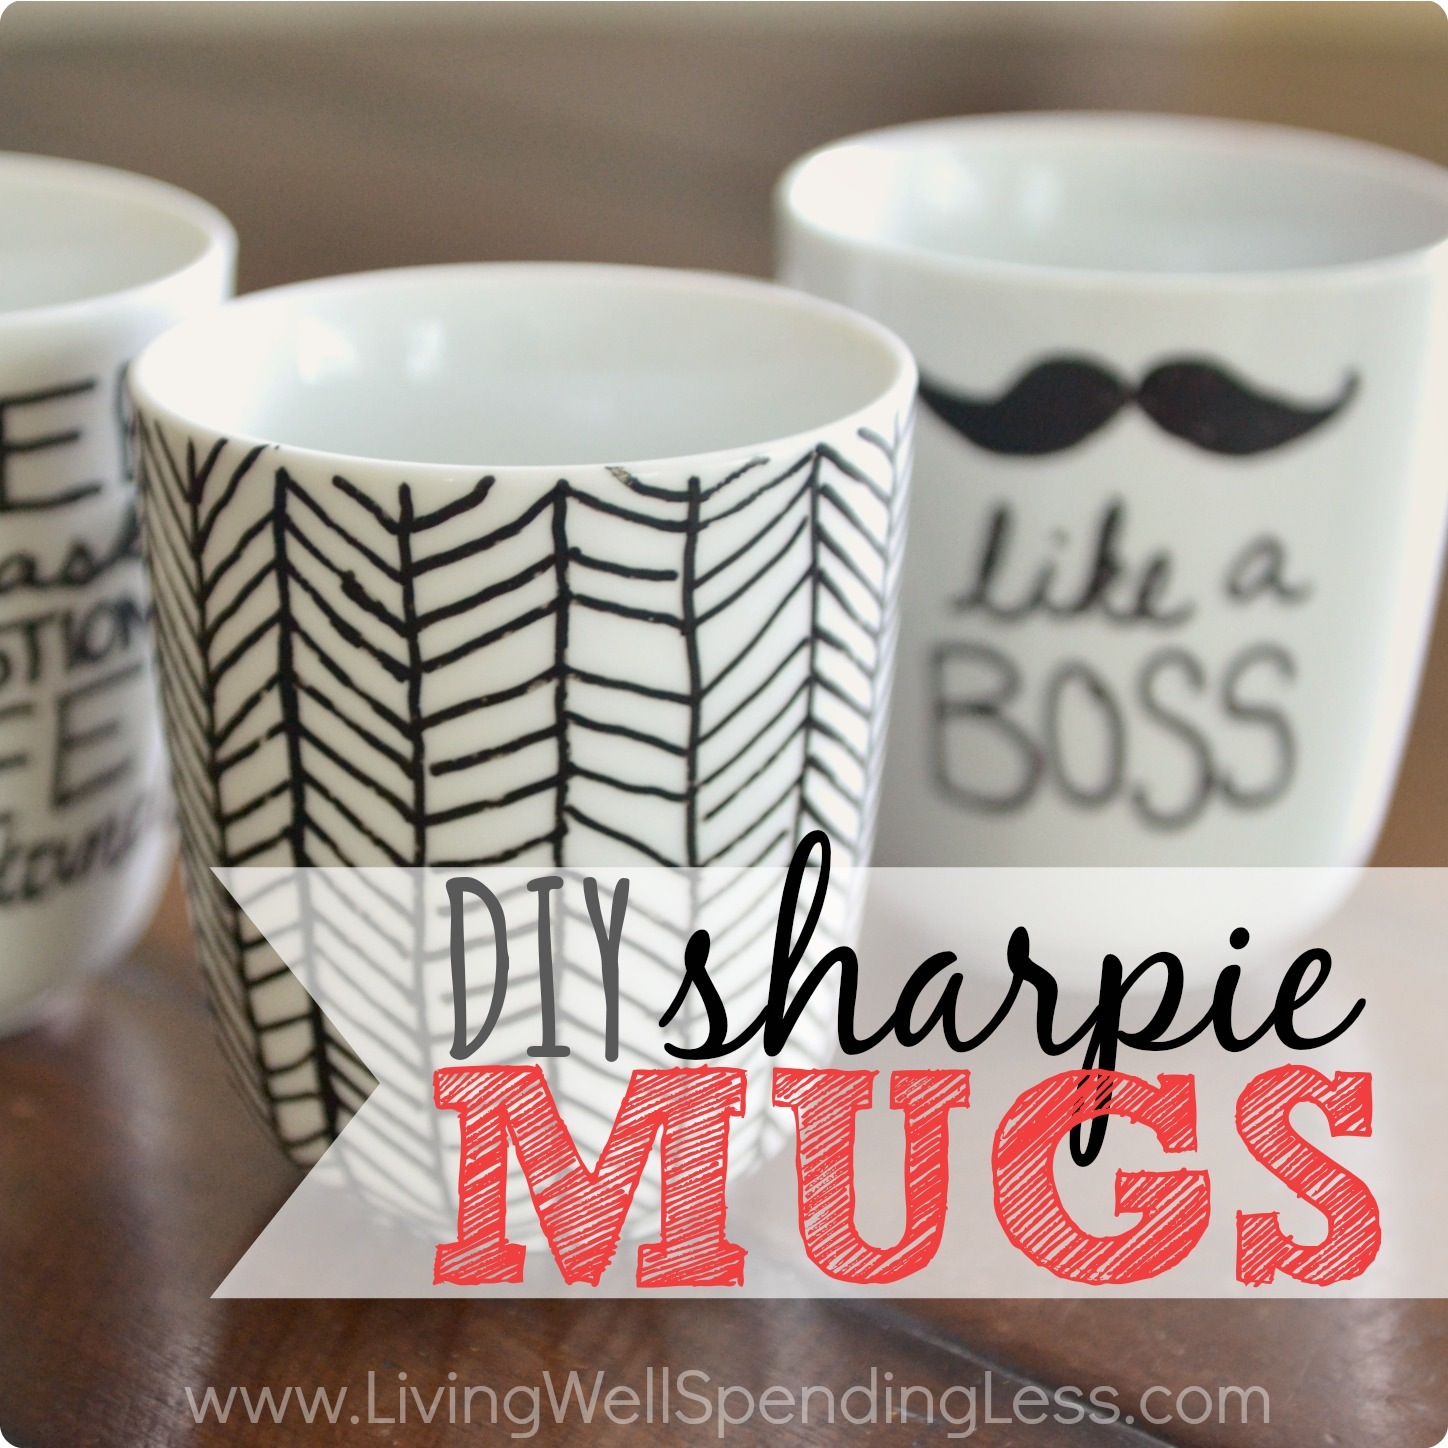 DIY black sharpie mugs DIY Coffee Mugs for Your Morning Java